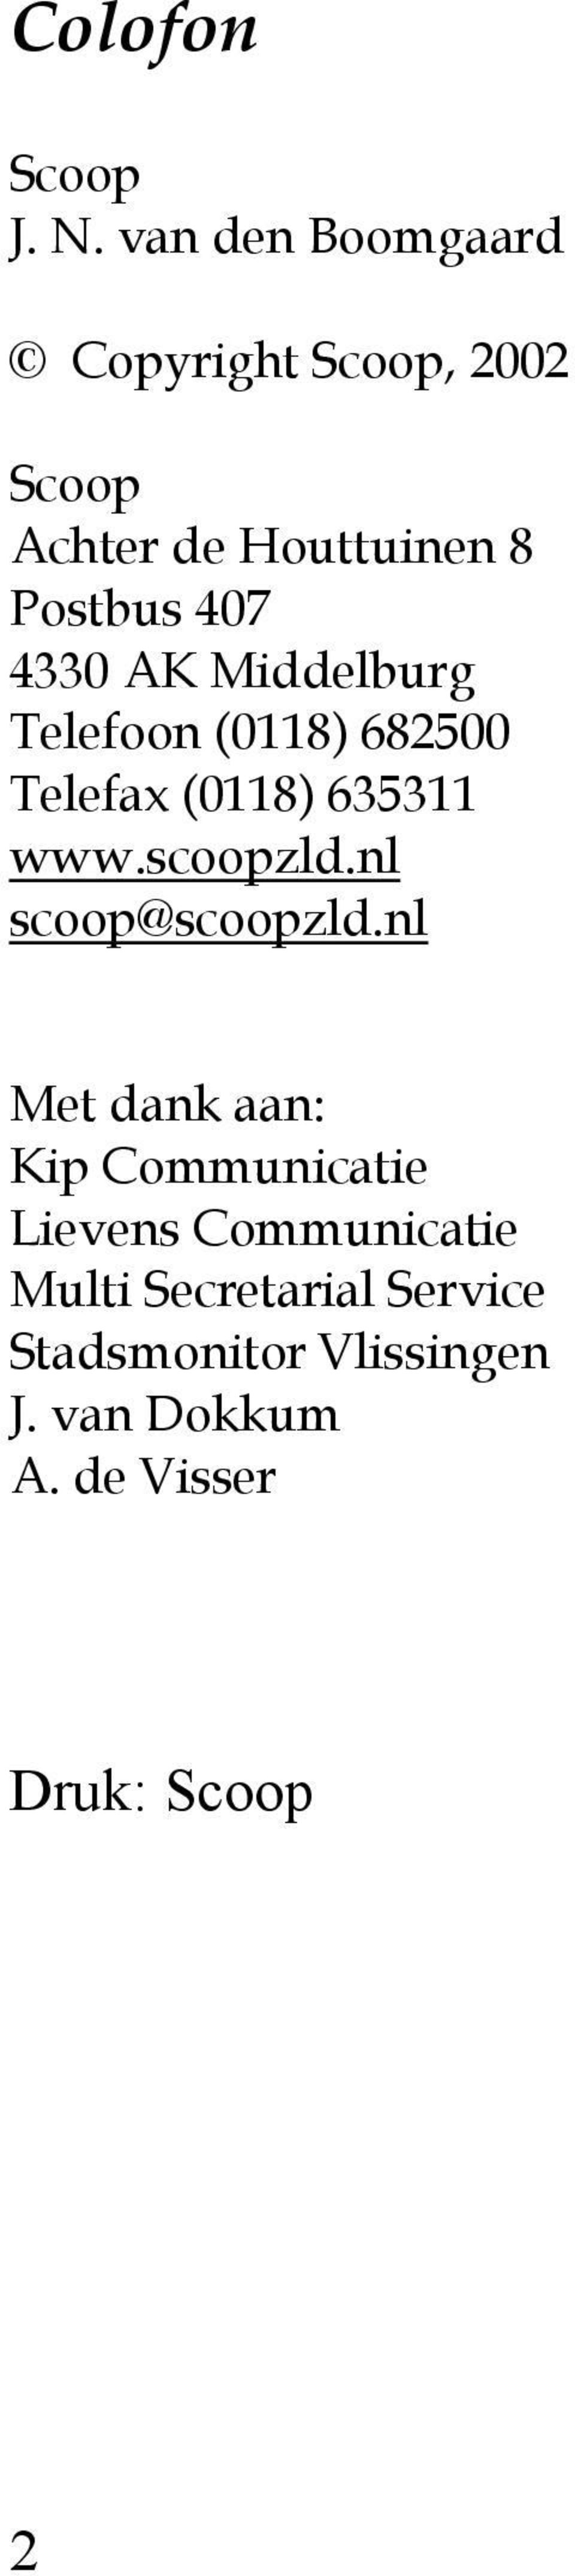 AK Middelburg Telefoon (0118) 682500 Telefax (0118) 635311 www.scoopzld.